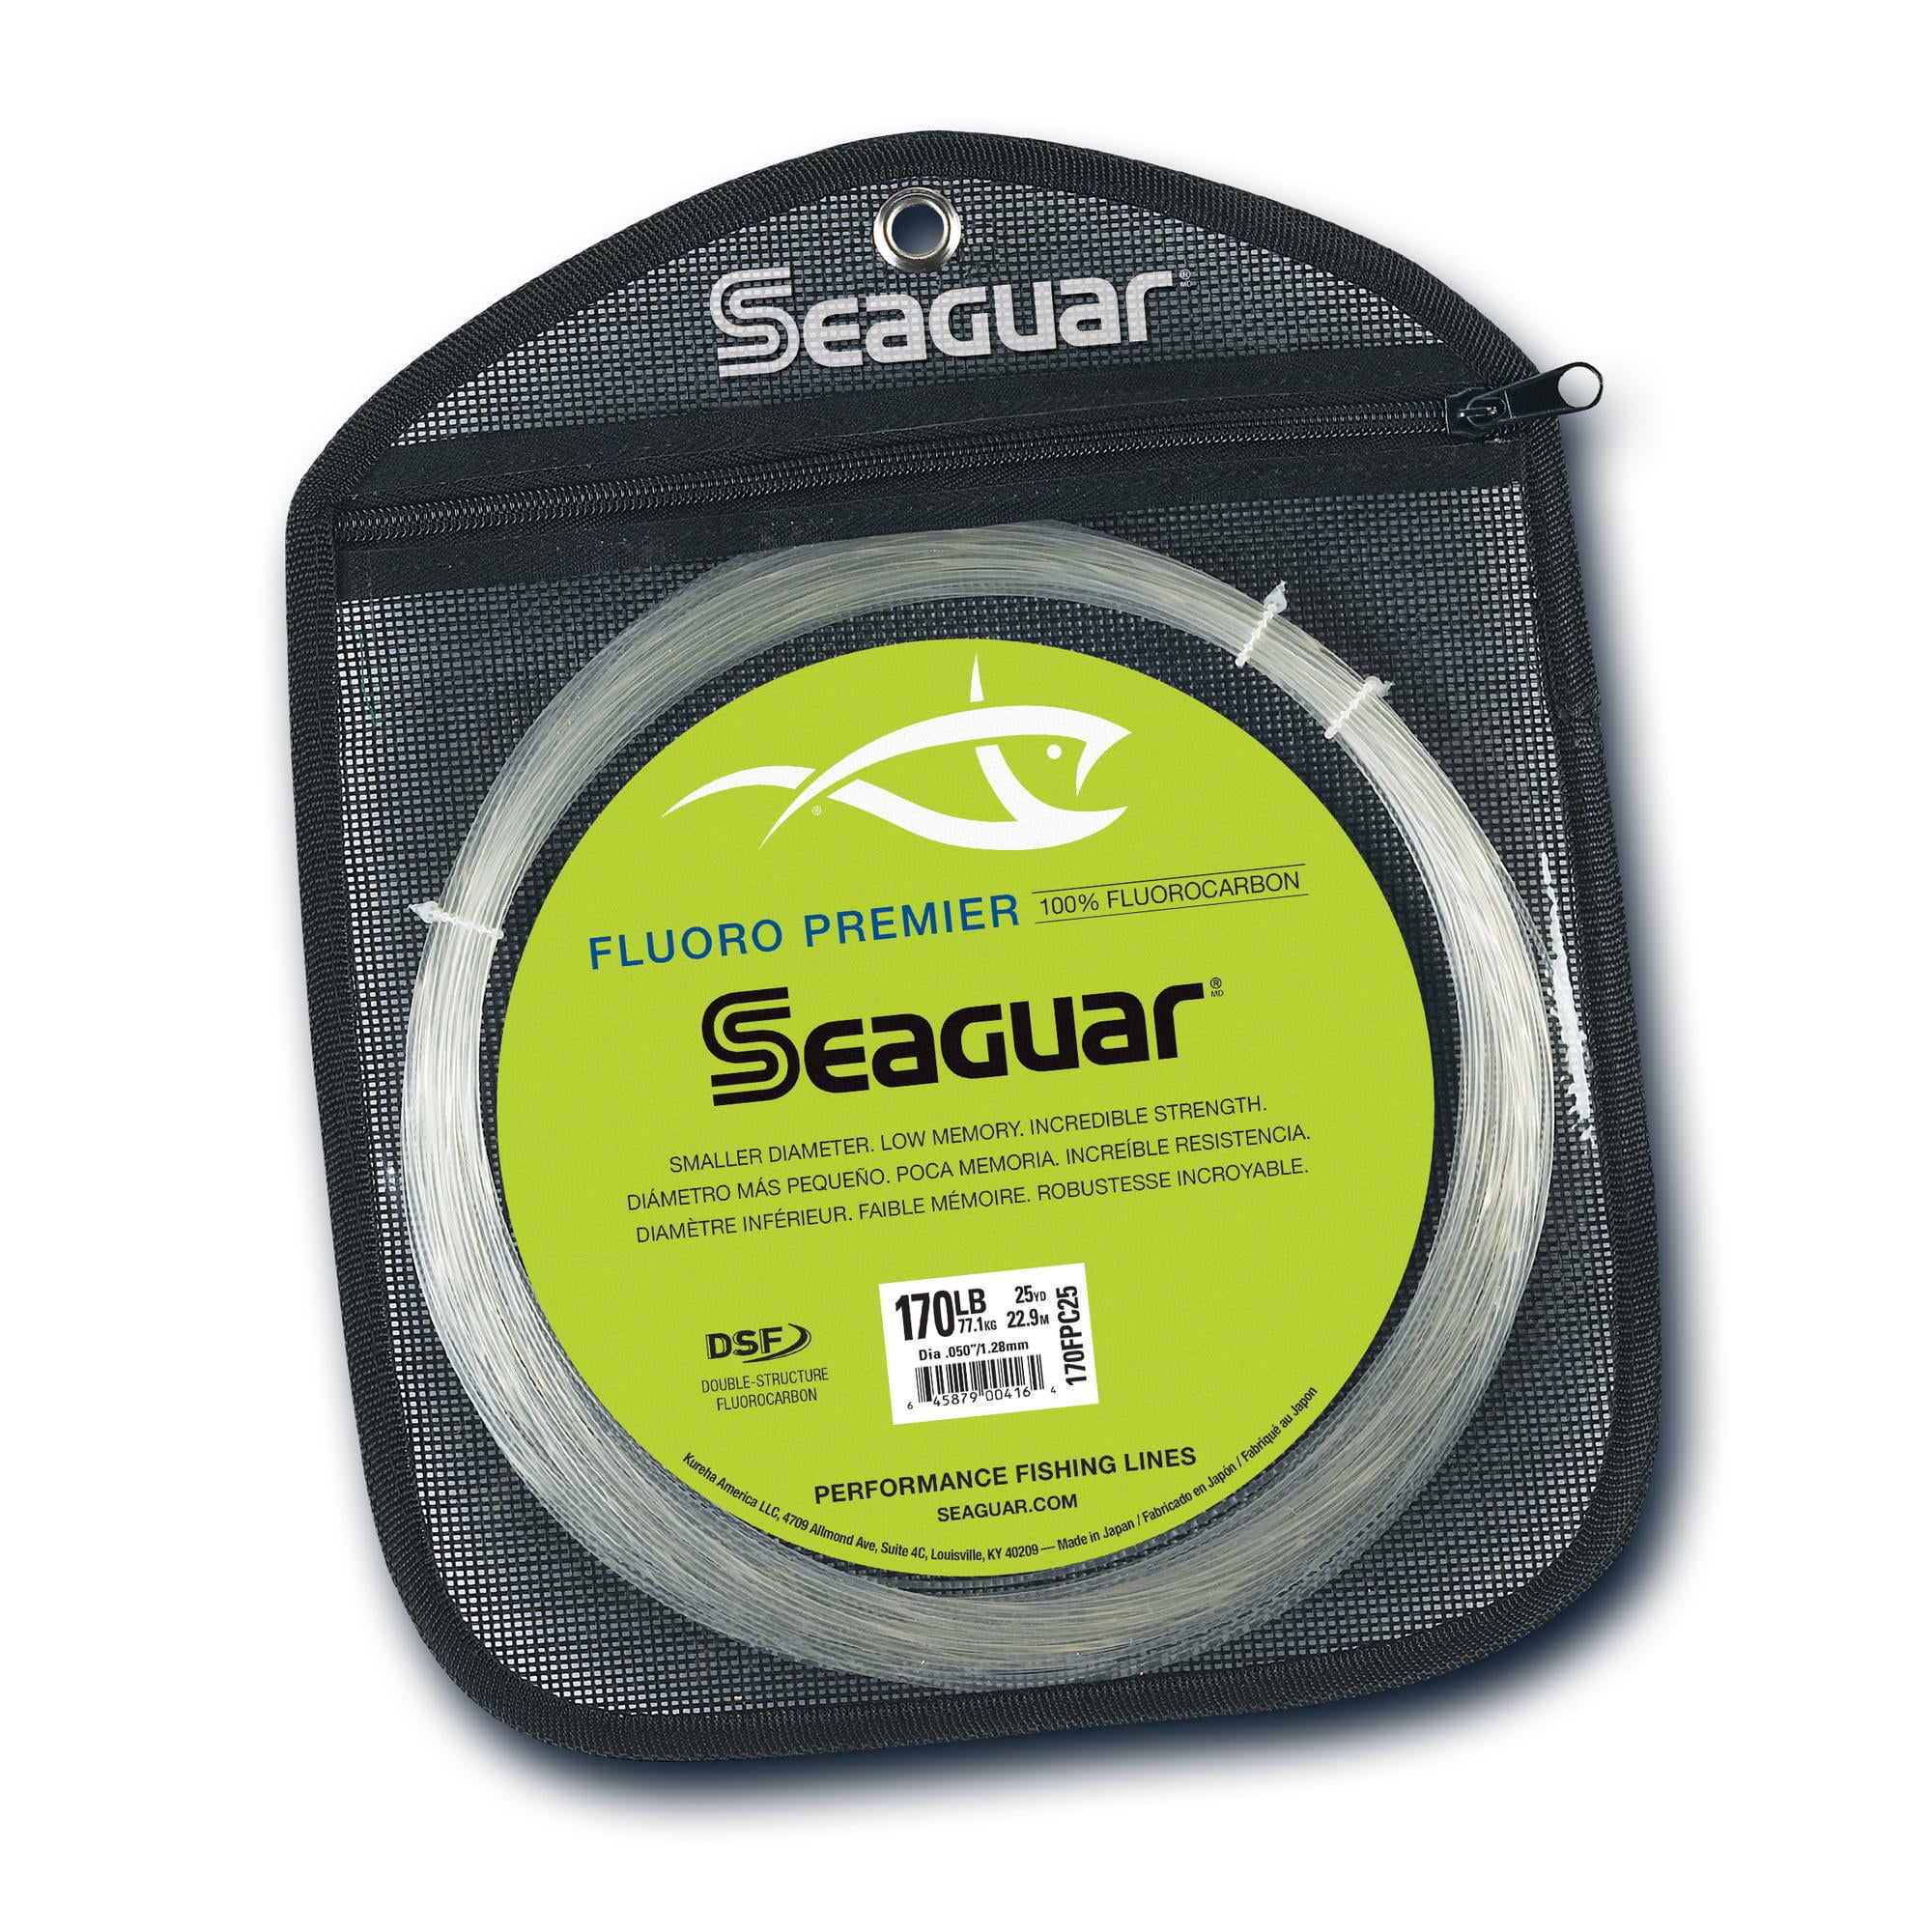 Seaguar Fluoro Premier 100% Fluorocarbon Fishing Line(DSF), 170lbs